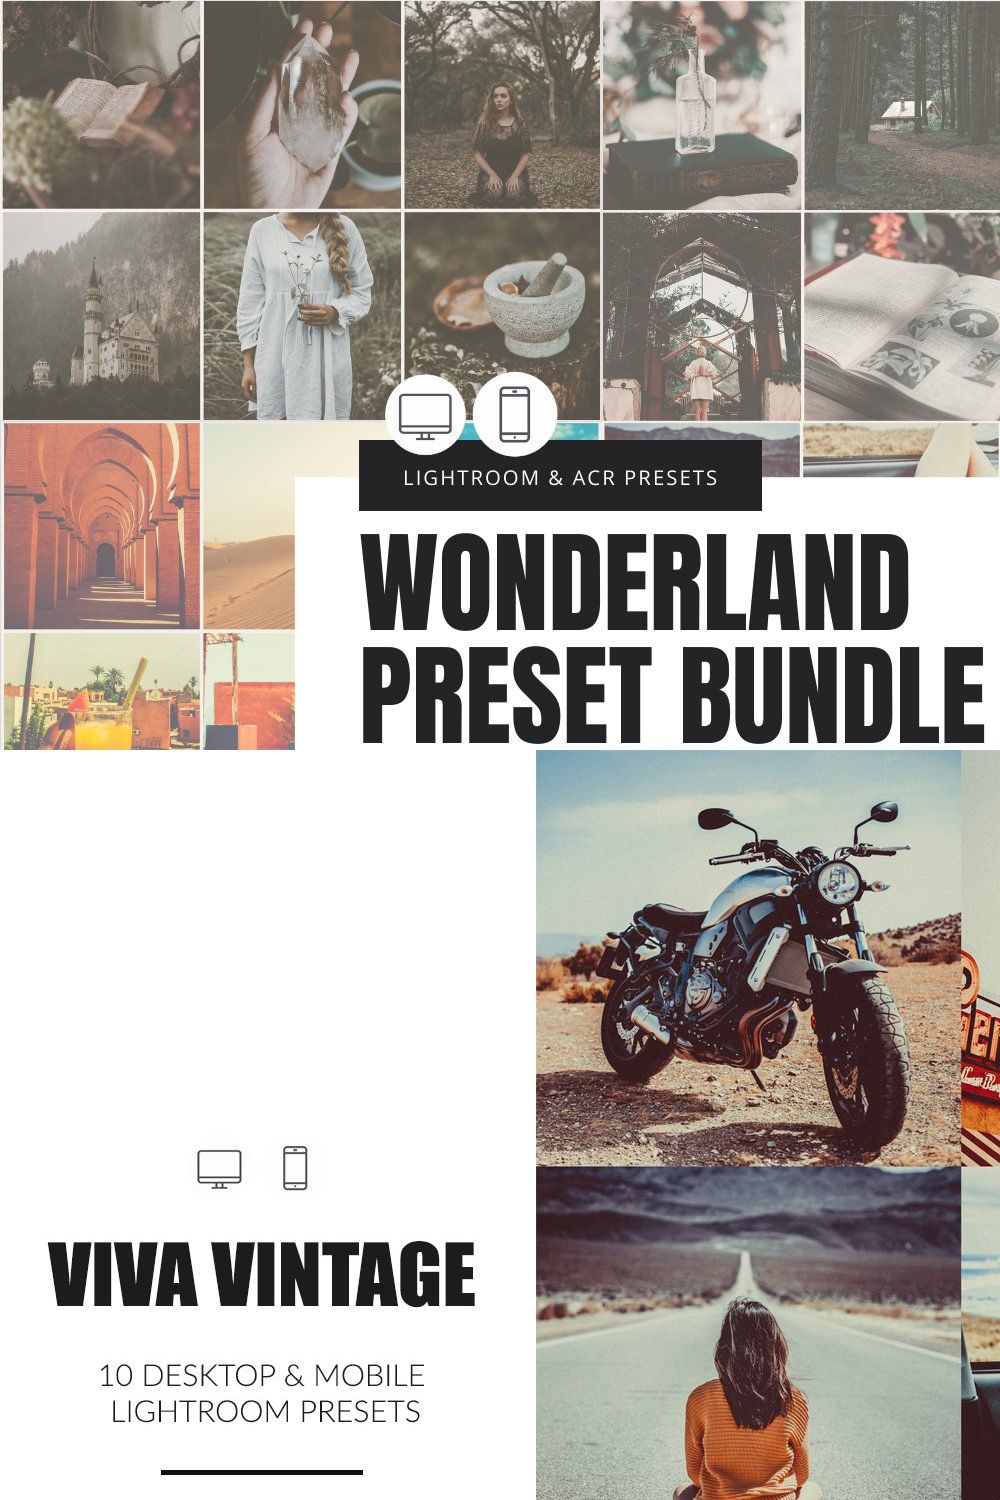 The Wonderland Preset Bundle pinterest preview image.